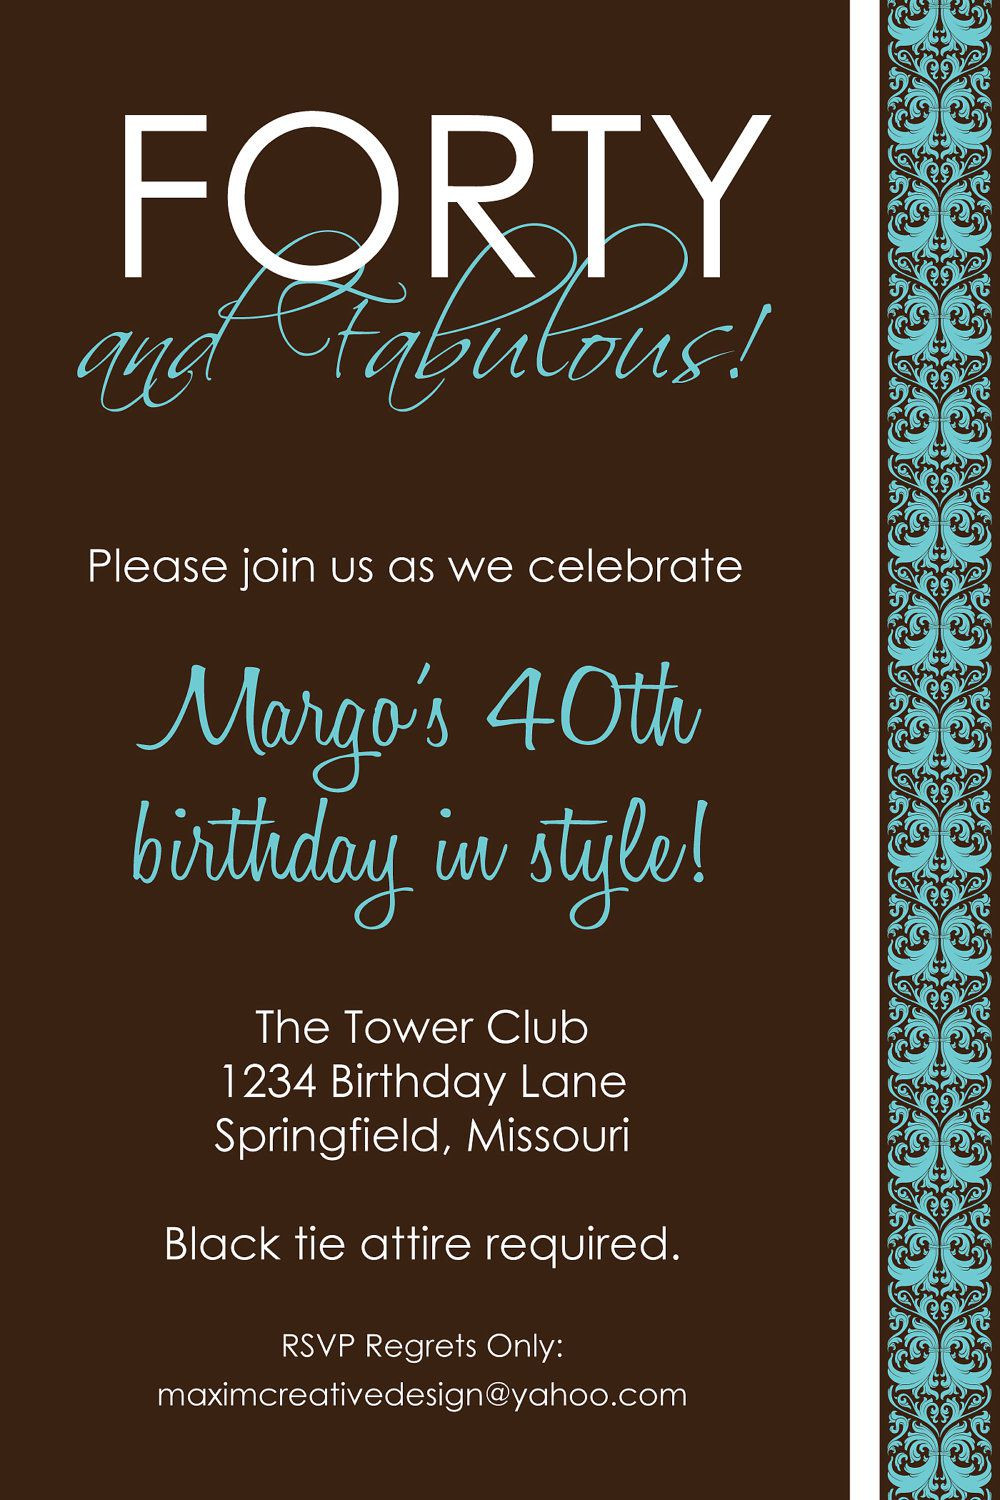 Birthday Invitations For Adults
 birthday invitations Funny birthday invites for adults